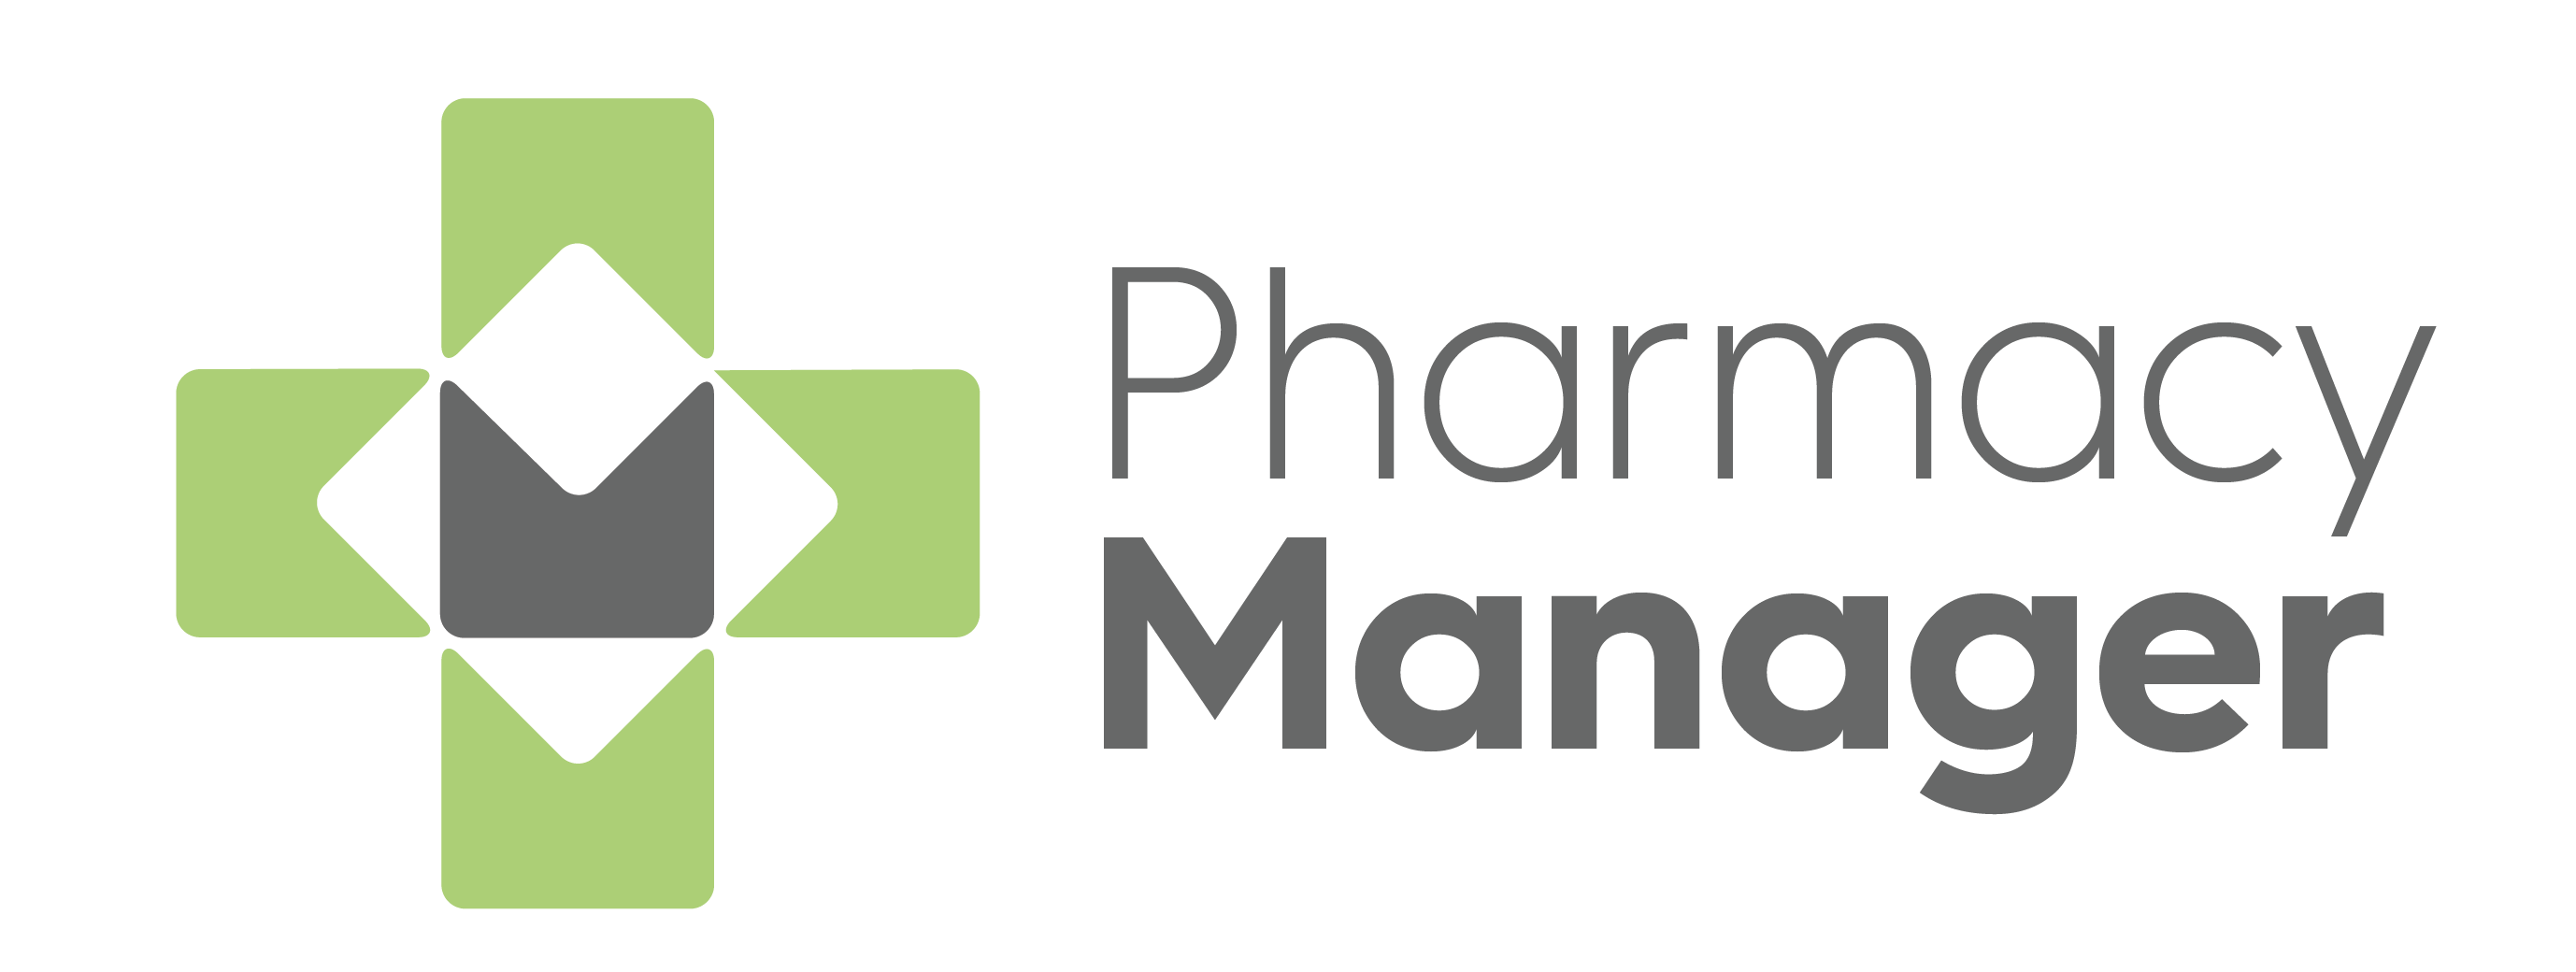 CHS_Pharmacy Manager logo